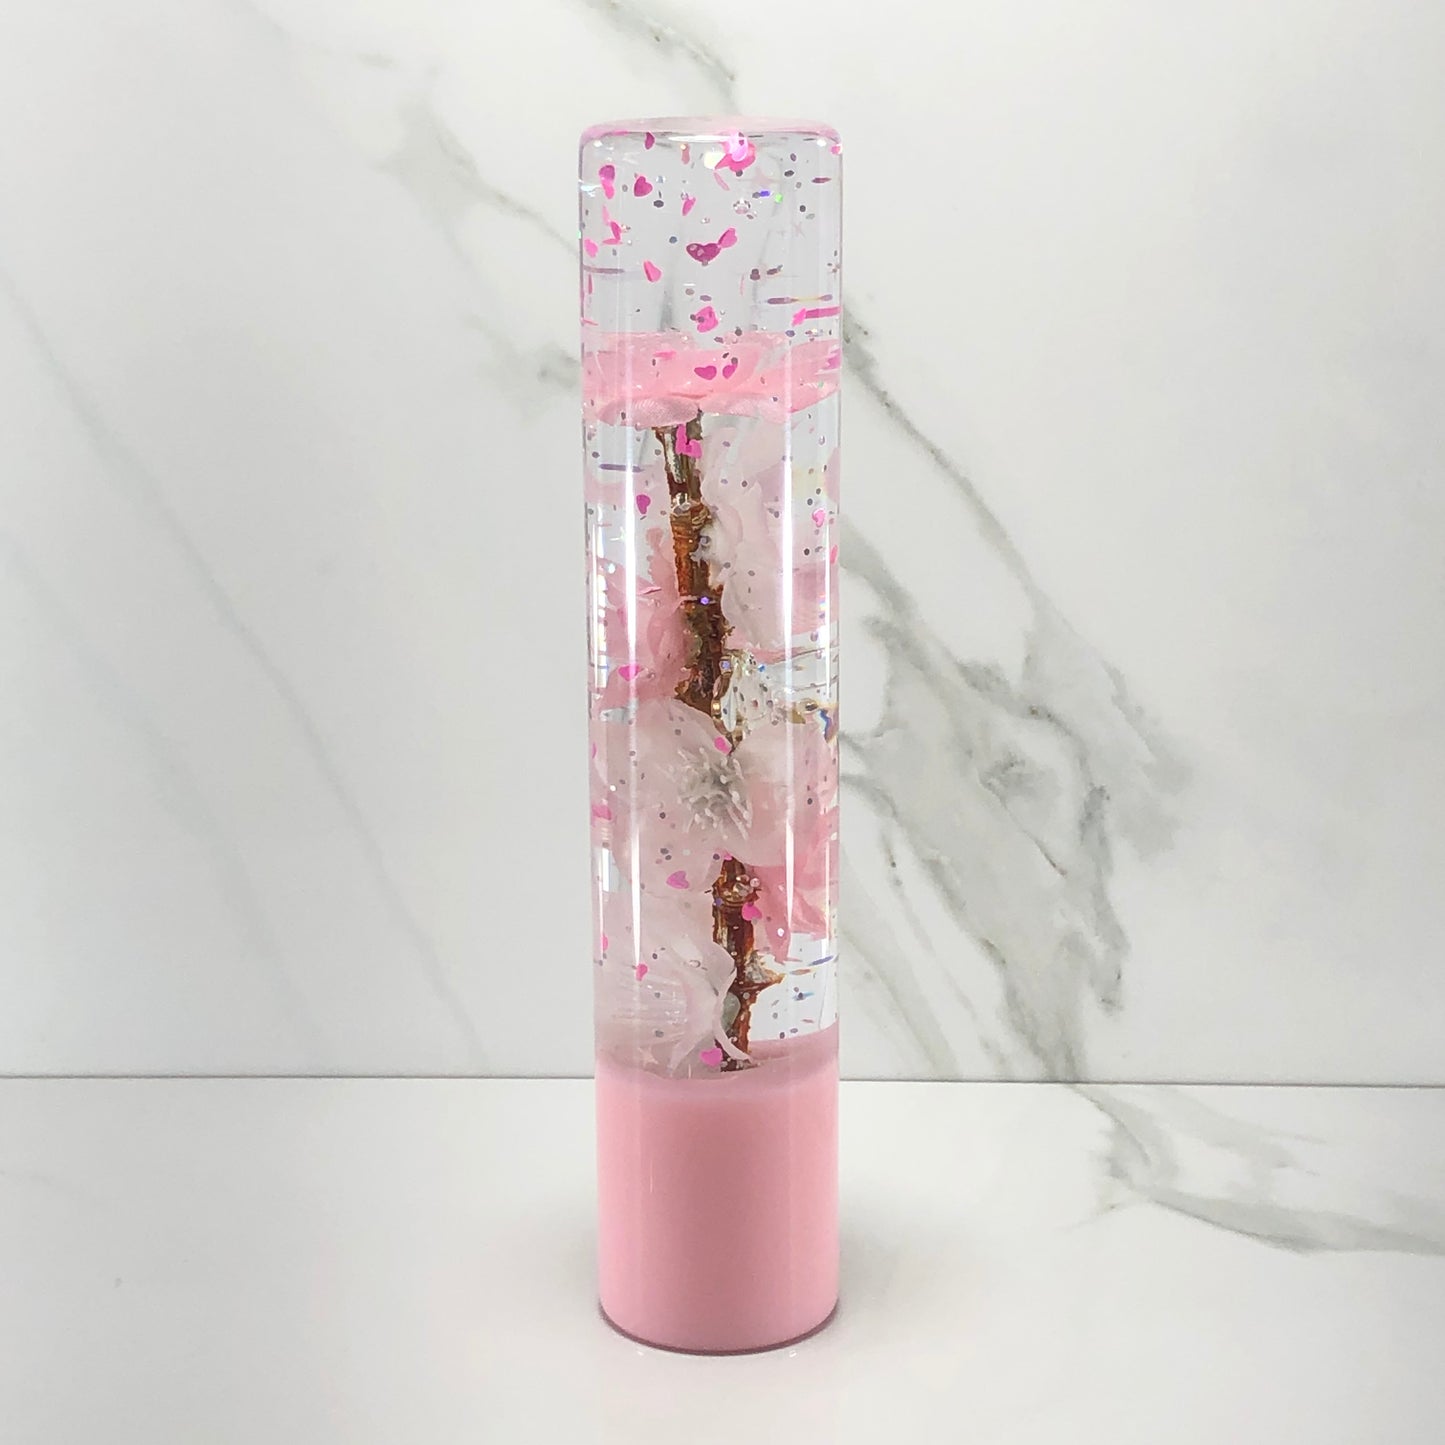 Mr__Grip 7 inch resin pink white cherry blossom